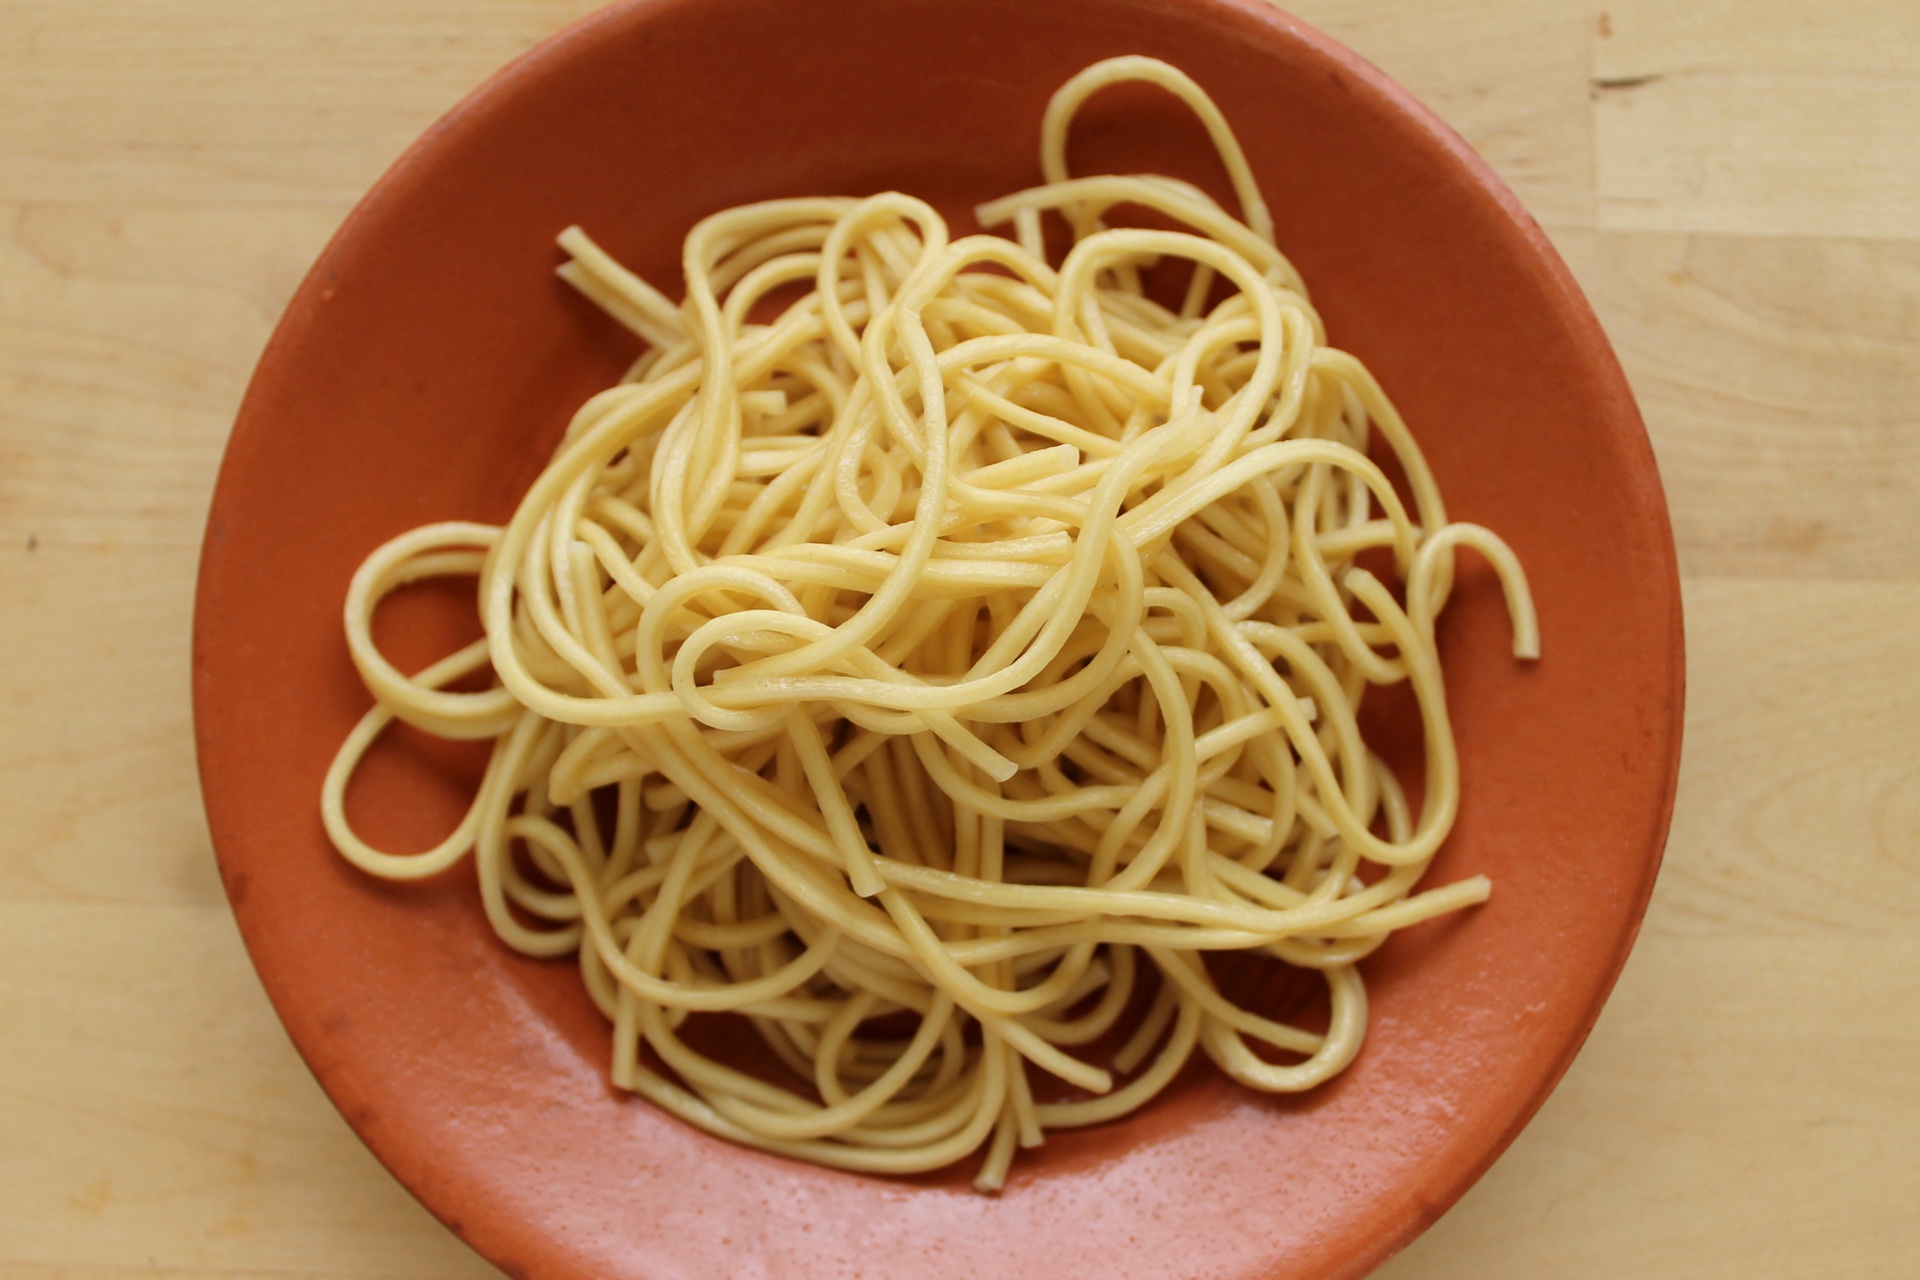 Hakubaku’s dried noodles are my second favorite ramen.